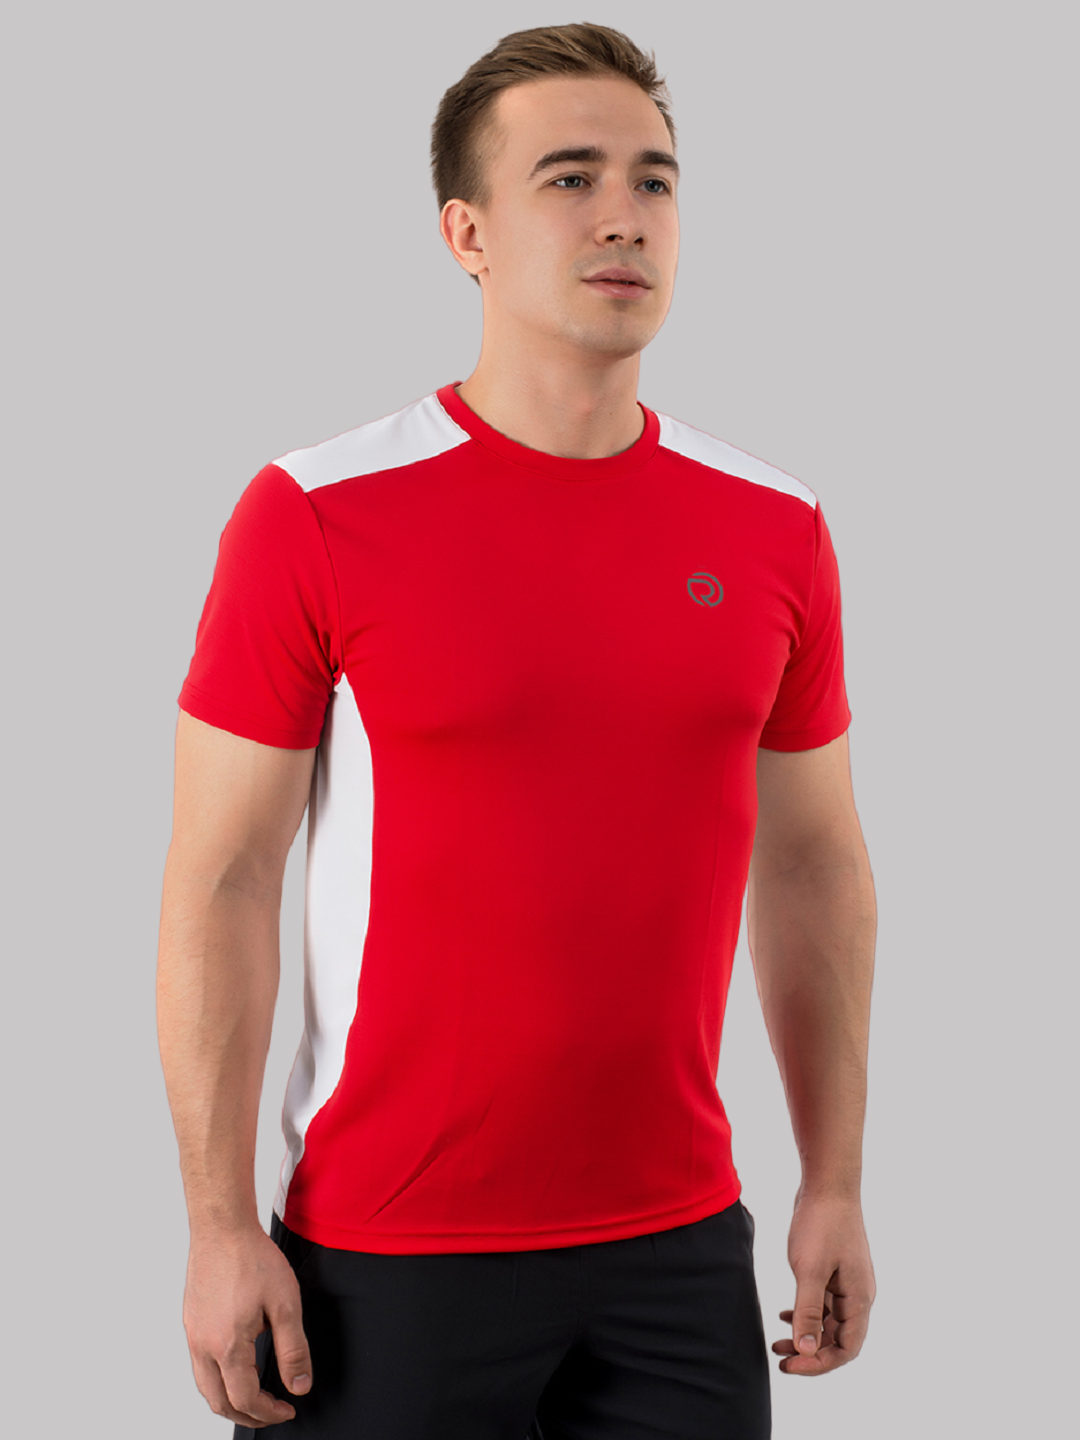 Men's Dry Fit Sports & Training Tshirt with Mandarin Collar